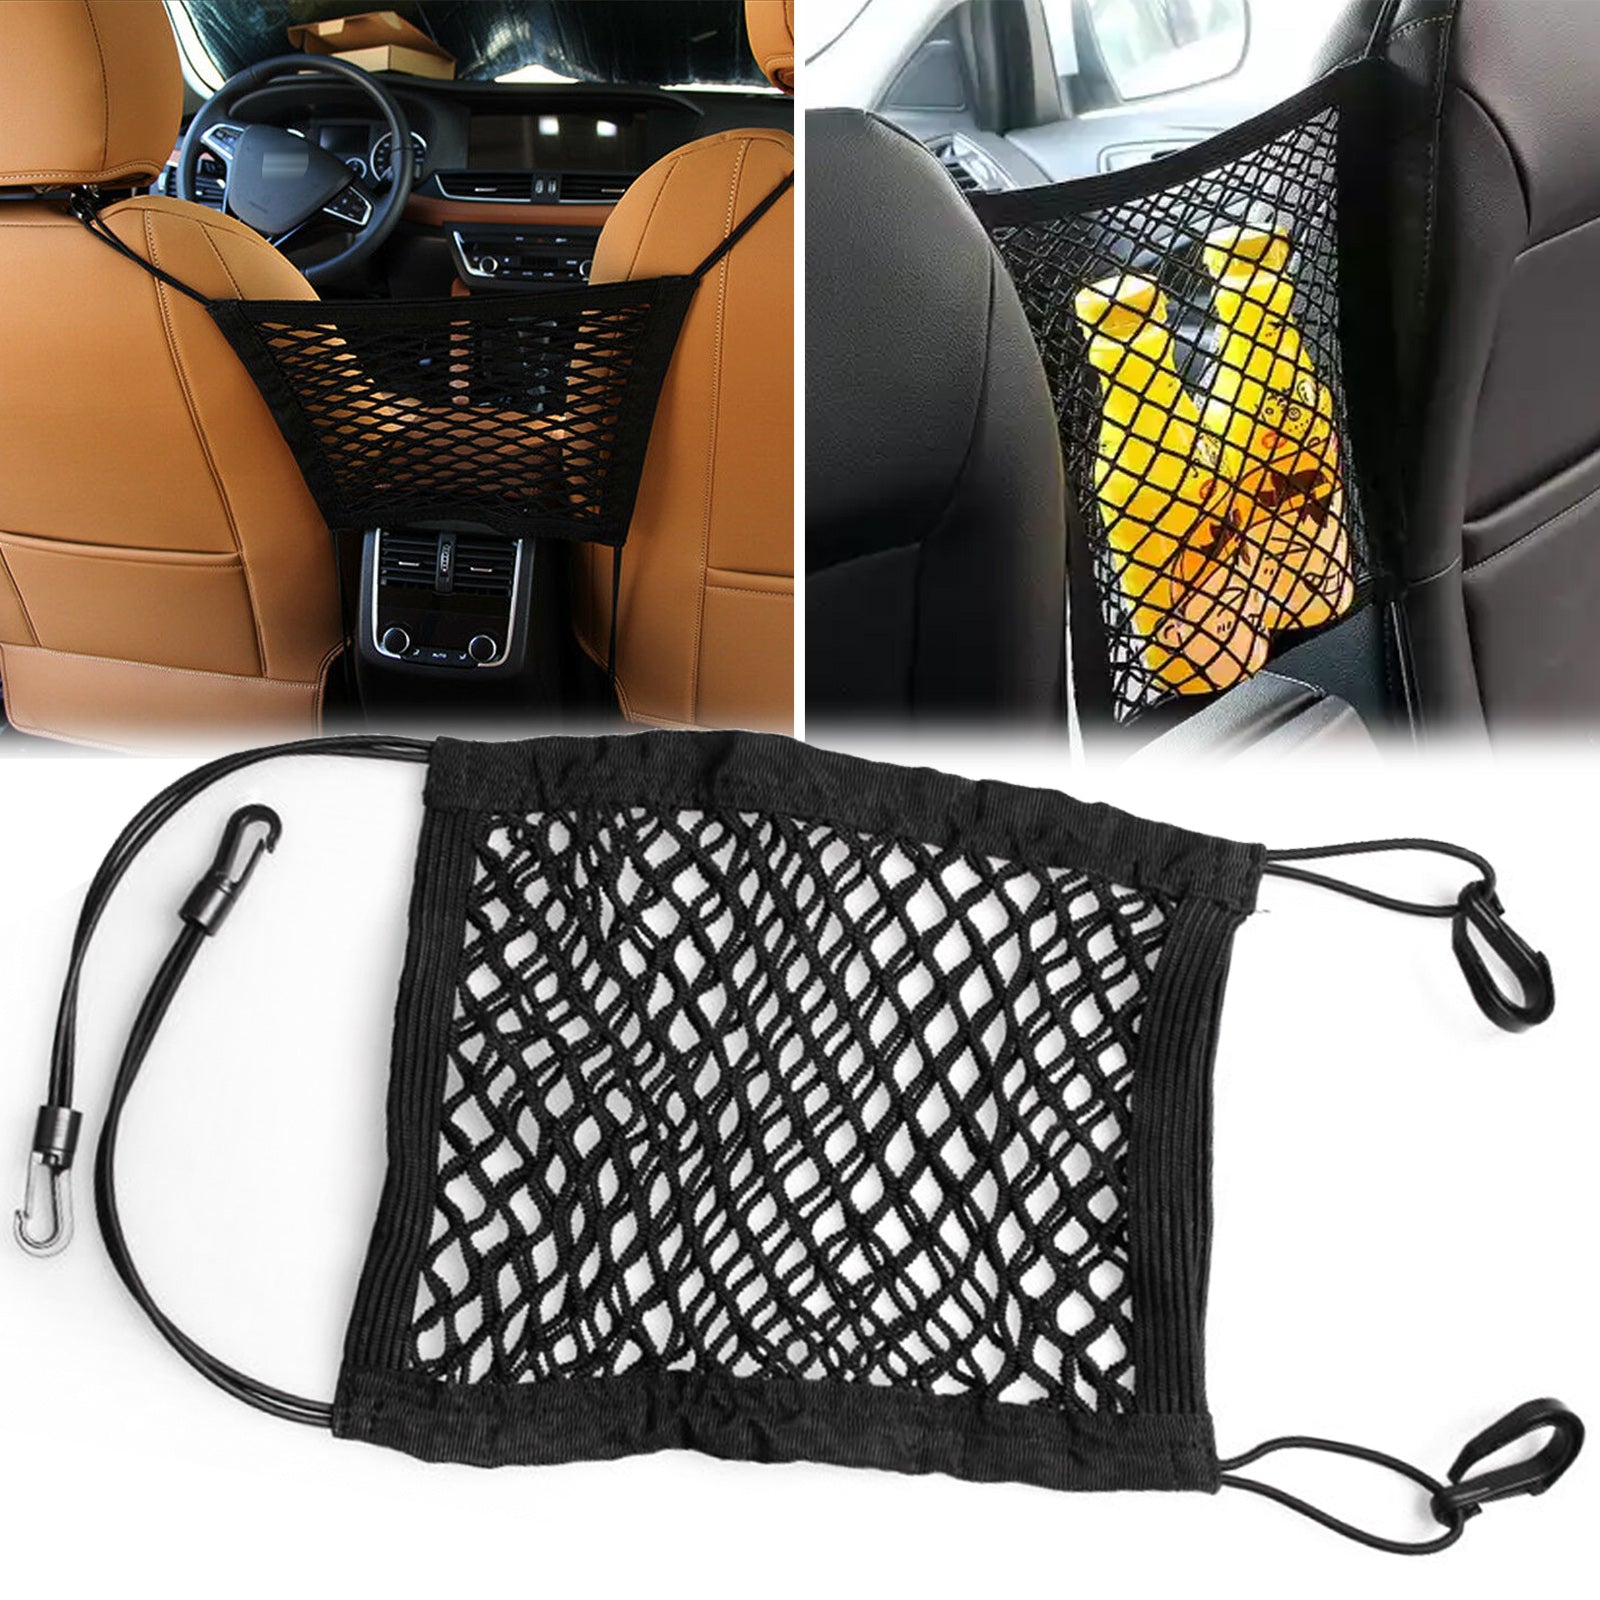 Seametal Car Handbag Holder Between Seat,Car Net Pocket Handbag Holder,Car  Seat Purse Holder Organizer Leather (Black) : Amazon.in: Car & Motorbike